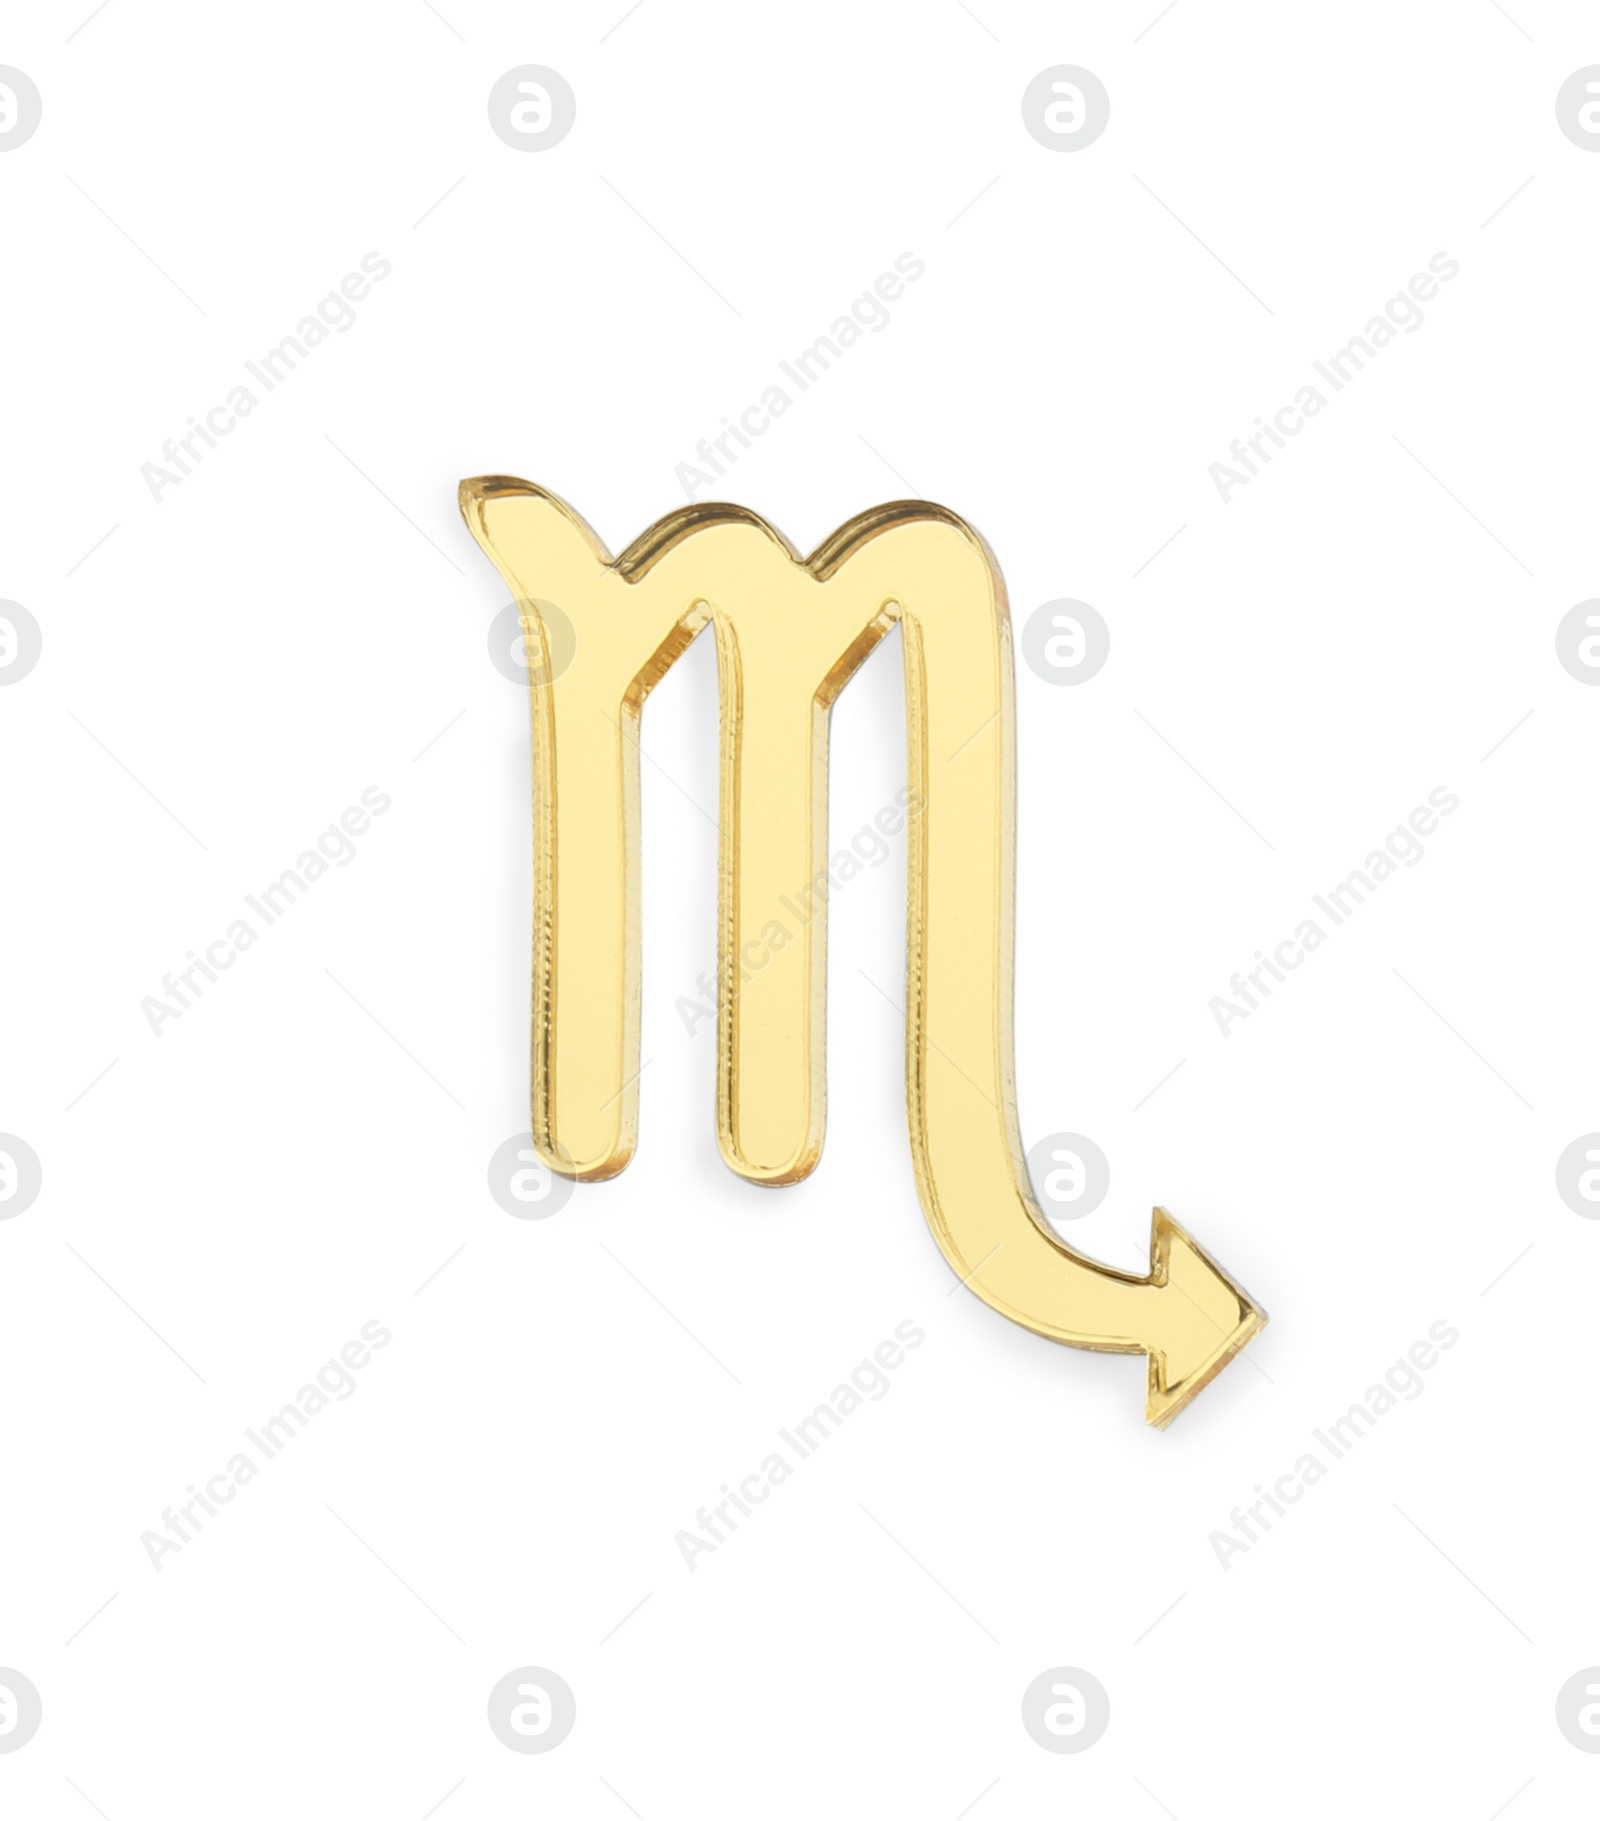 Photo of Zodiac sign. Golden Scorpio symbol isolated on white, top view